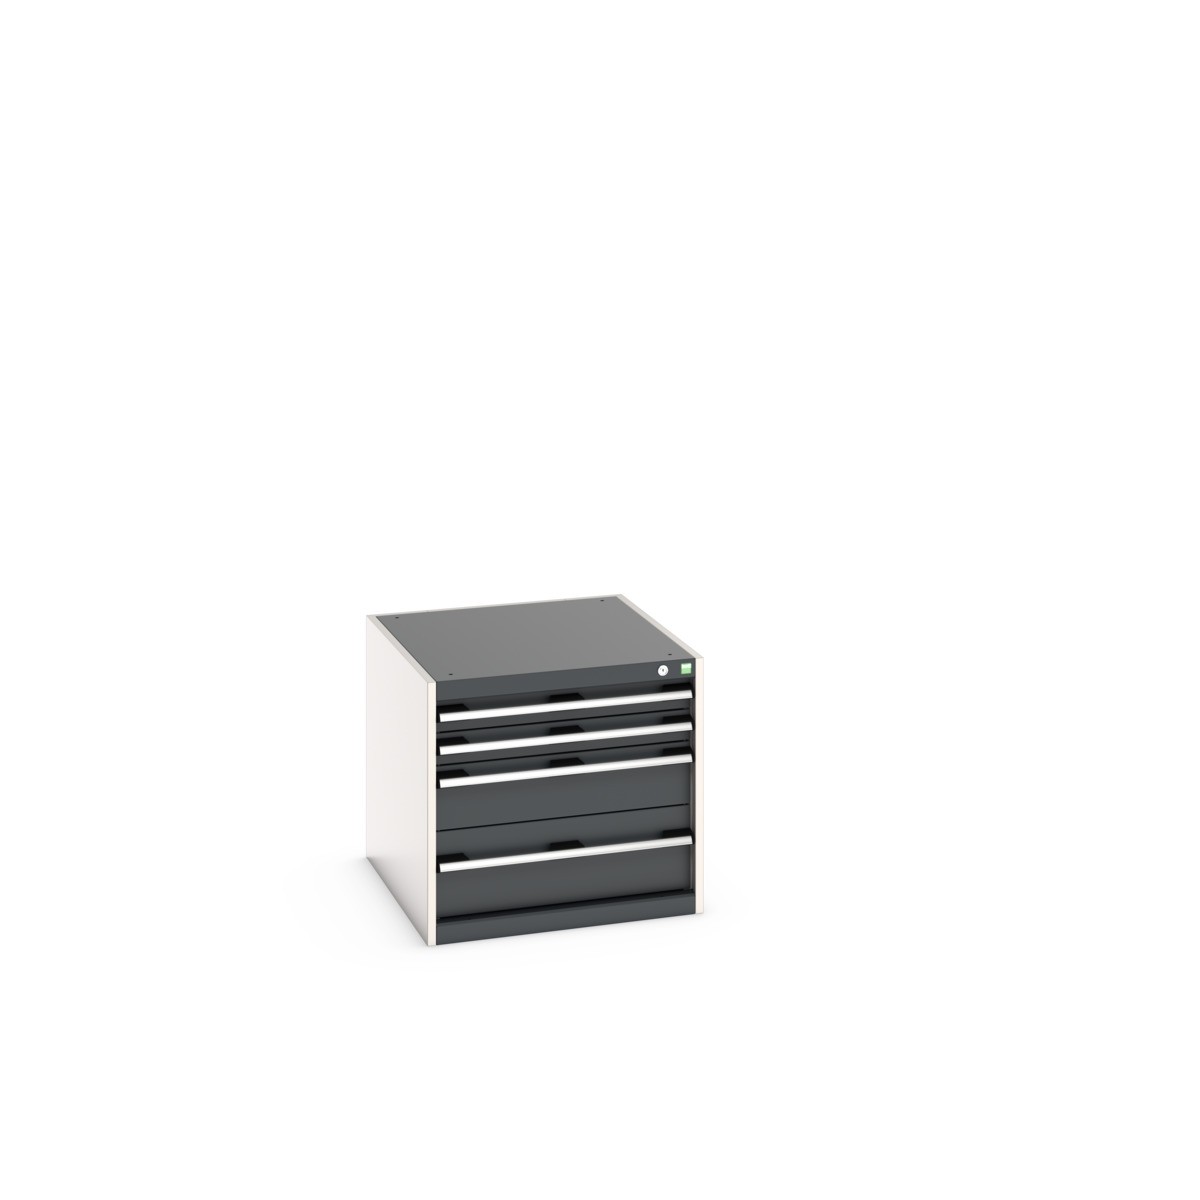 40027100. - cubio drawer cabinet 